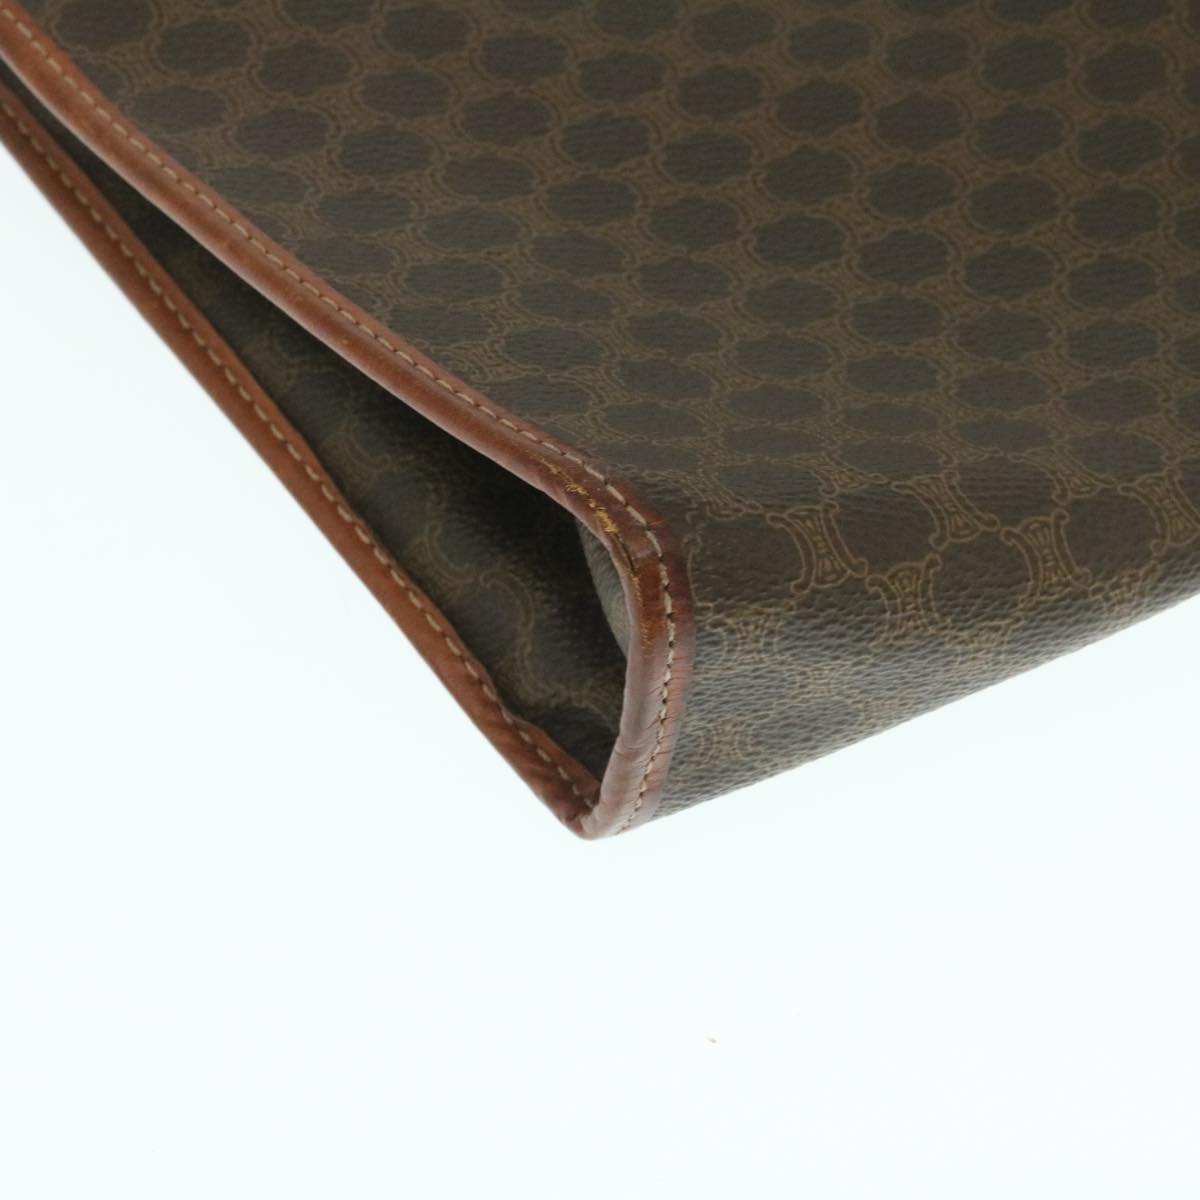 CELINE Macadam Canvas Clutch Bag PVC Leather Brown Auth 29196